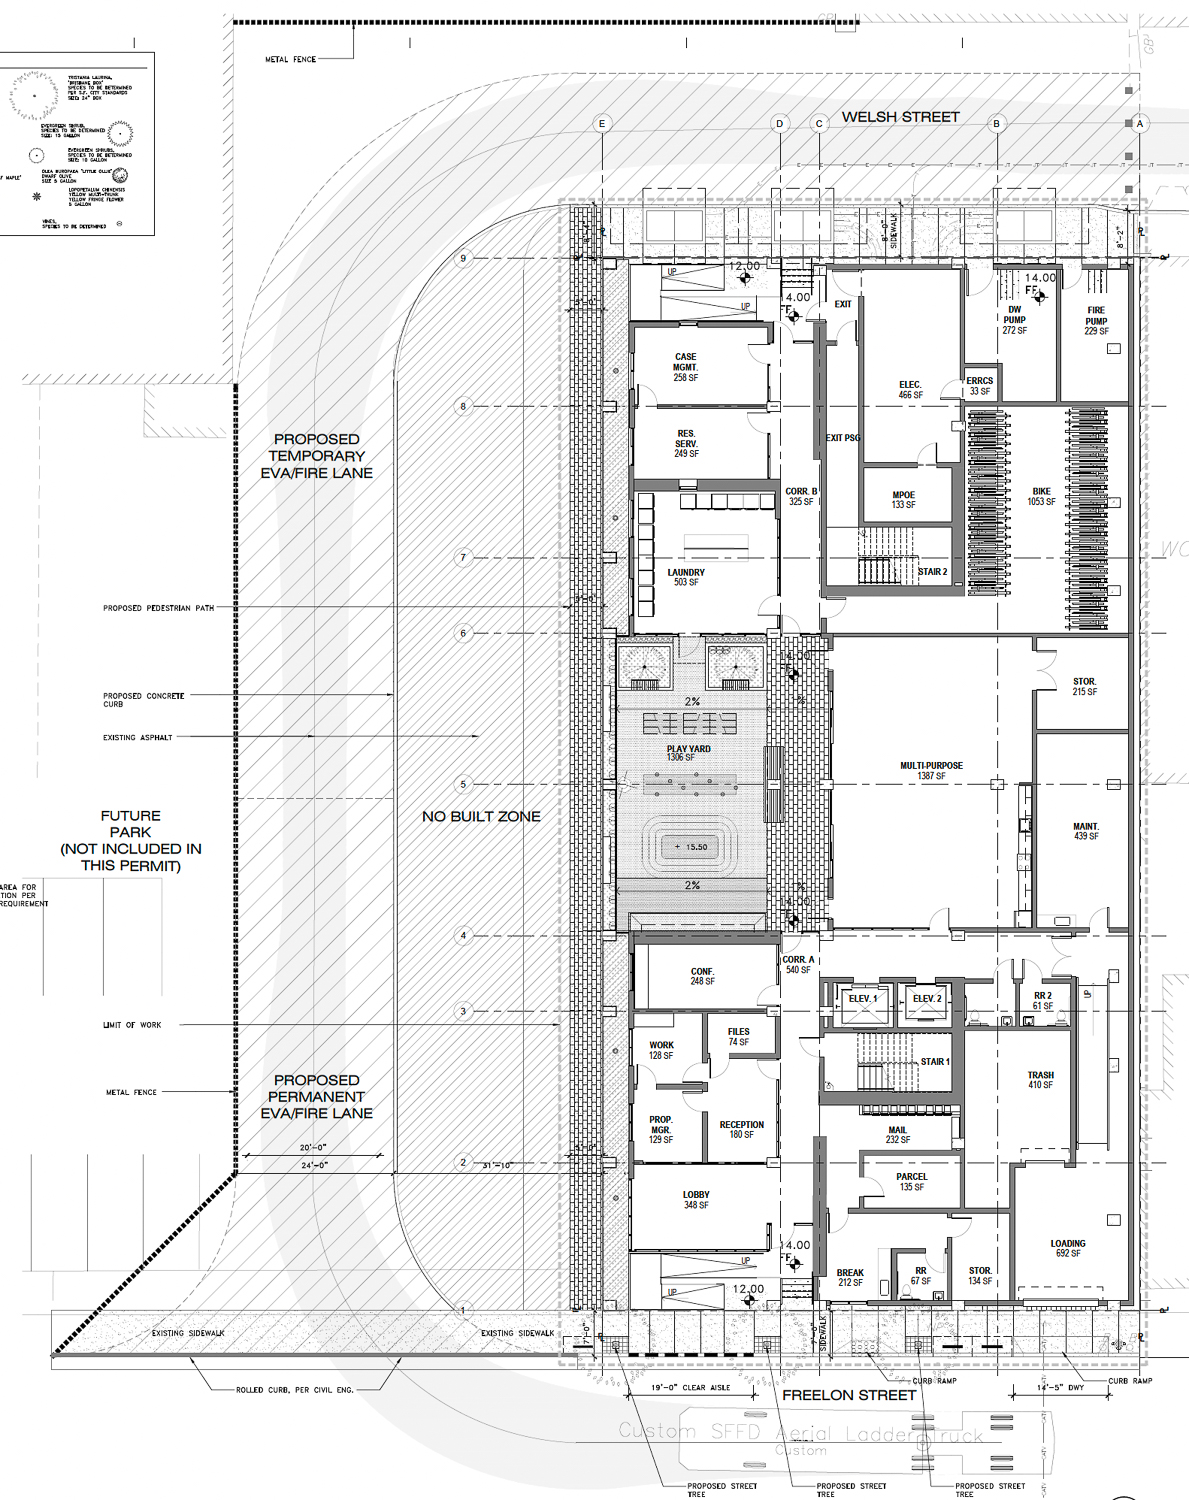 160 Freelon Street ground-level floor plan, illustration by Leddy Maytum Stacy Architects